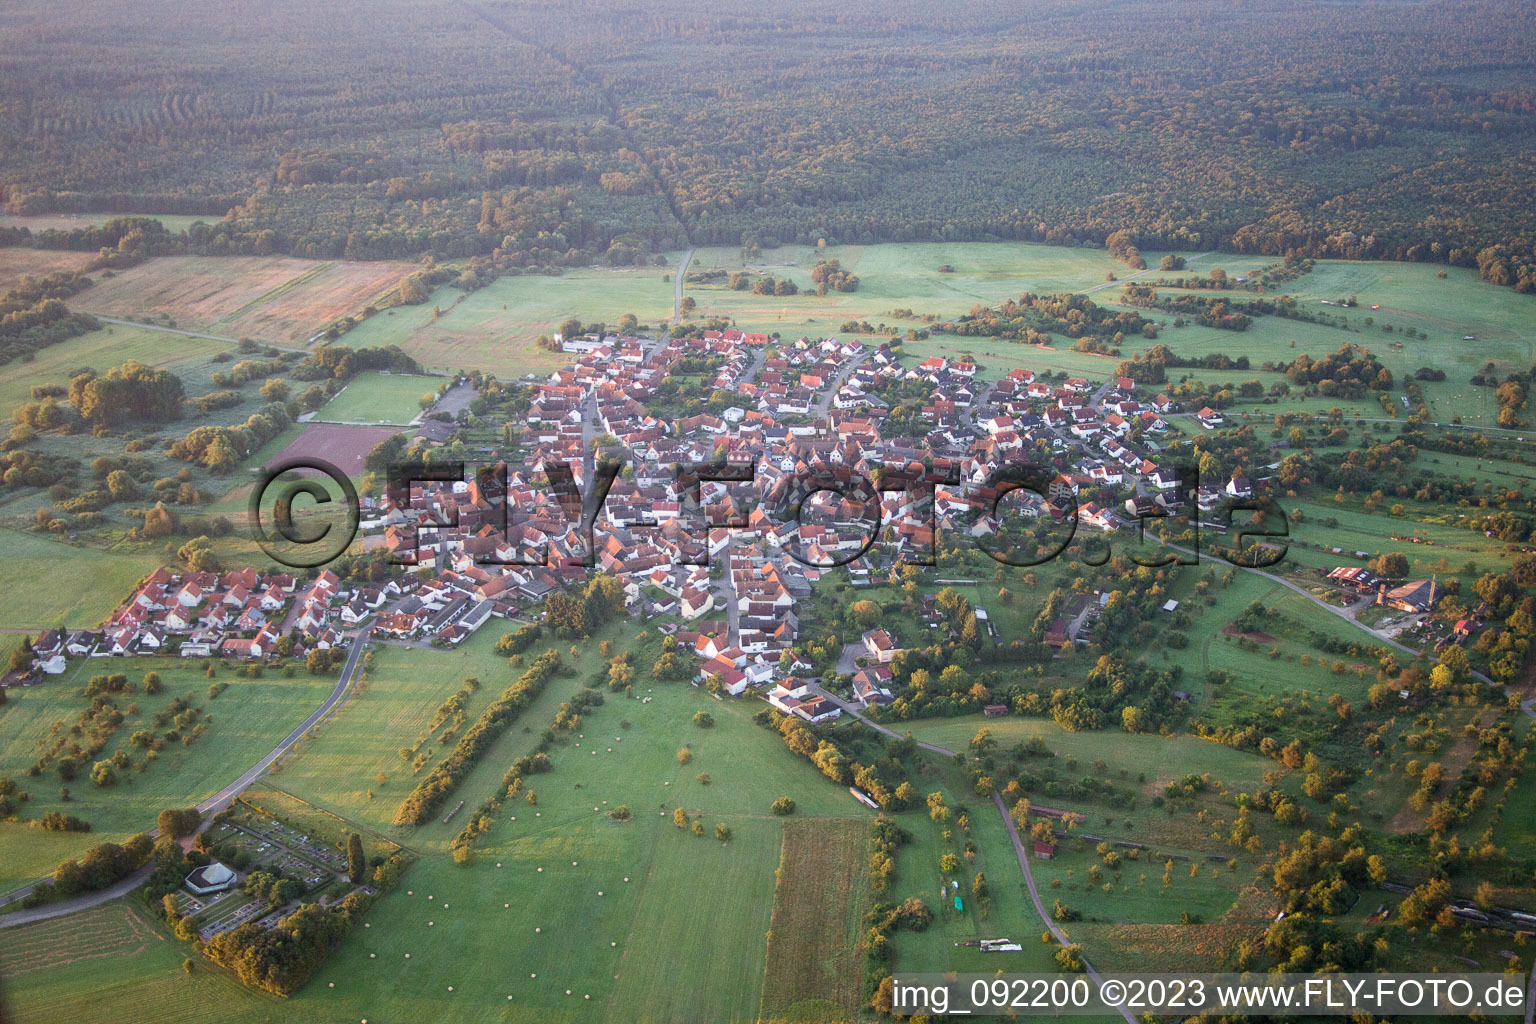 District Büchelberg in Wörth am Rhein in the state Rhineland-Palatinate, Germany viewn from the air